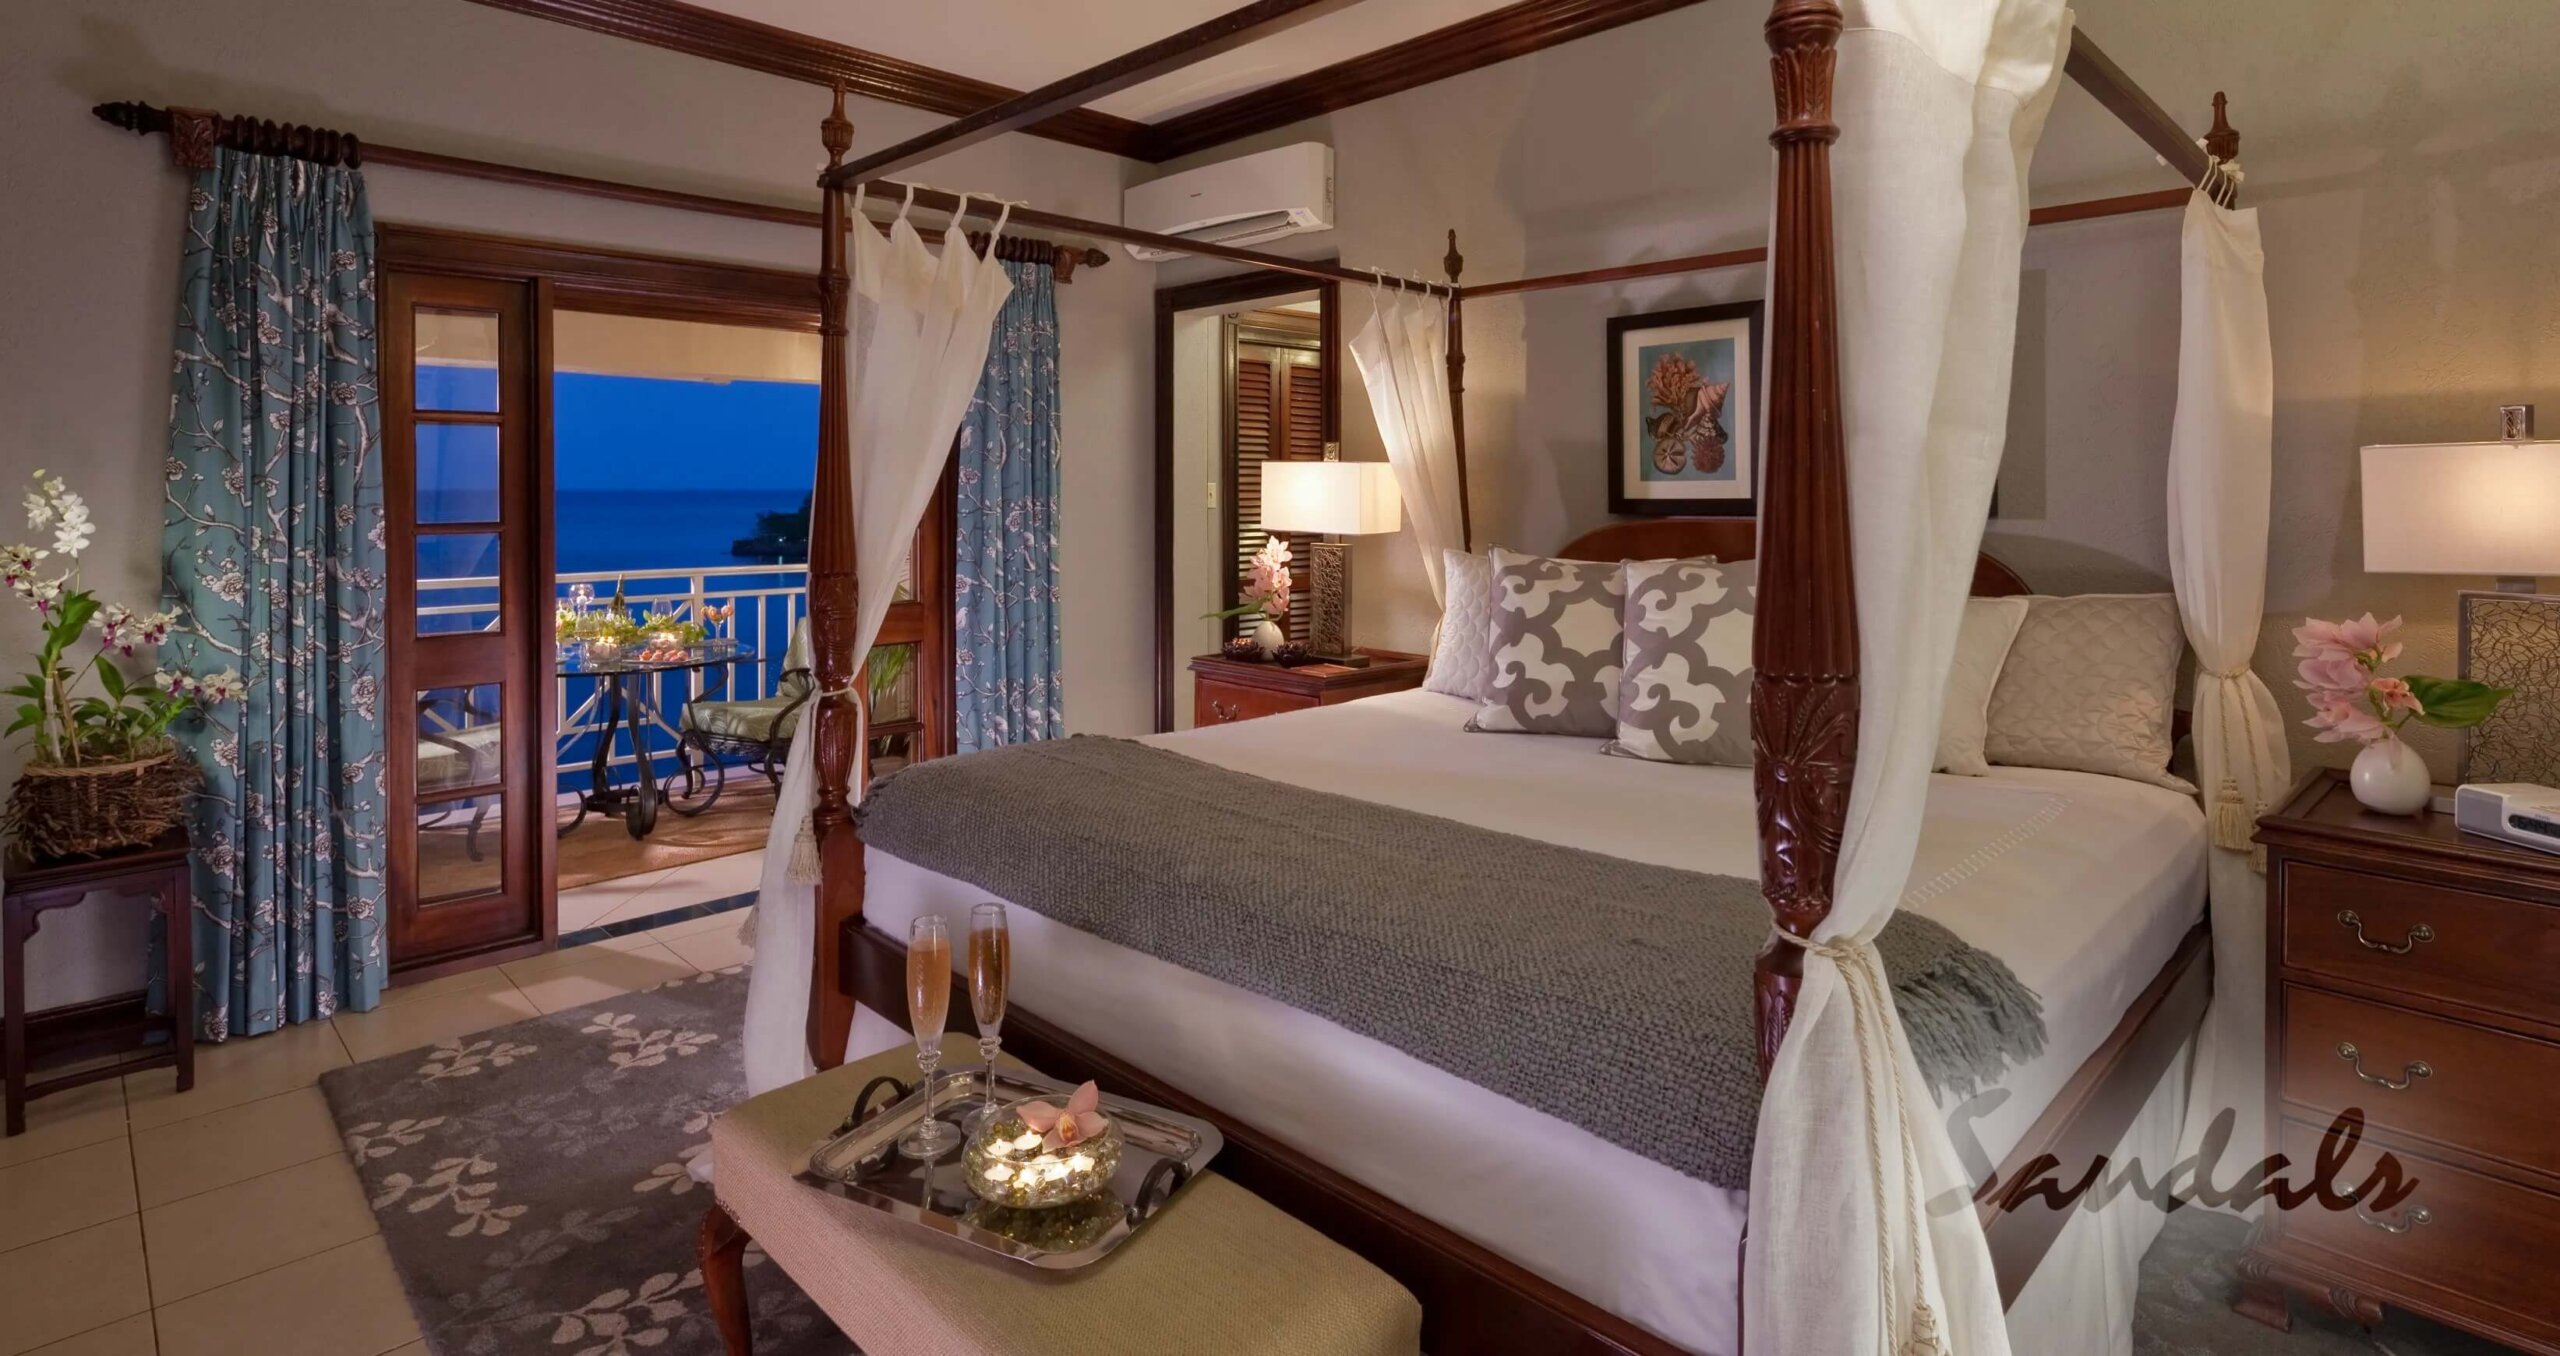 Romantic honeymoon suite at Sandals Resort in Jamaica at Sandals Royal Plantation.